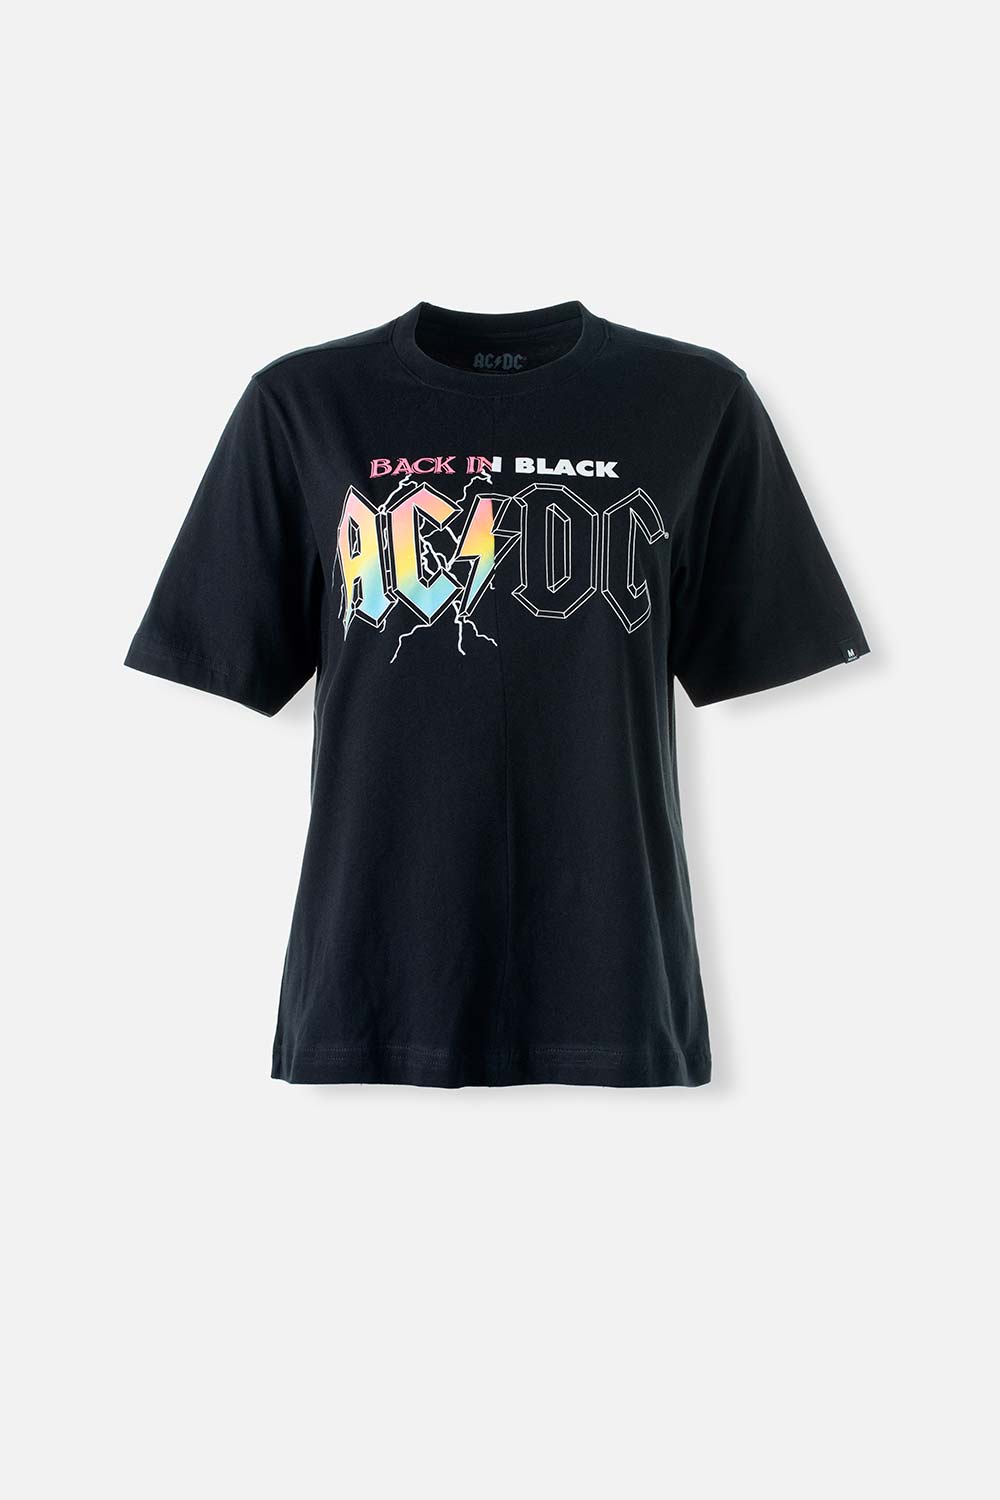 Camiseta de AC/DC negra manga corta para mujer XS-0